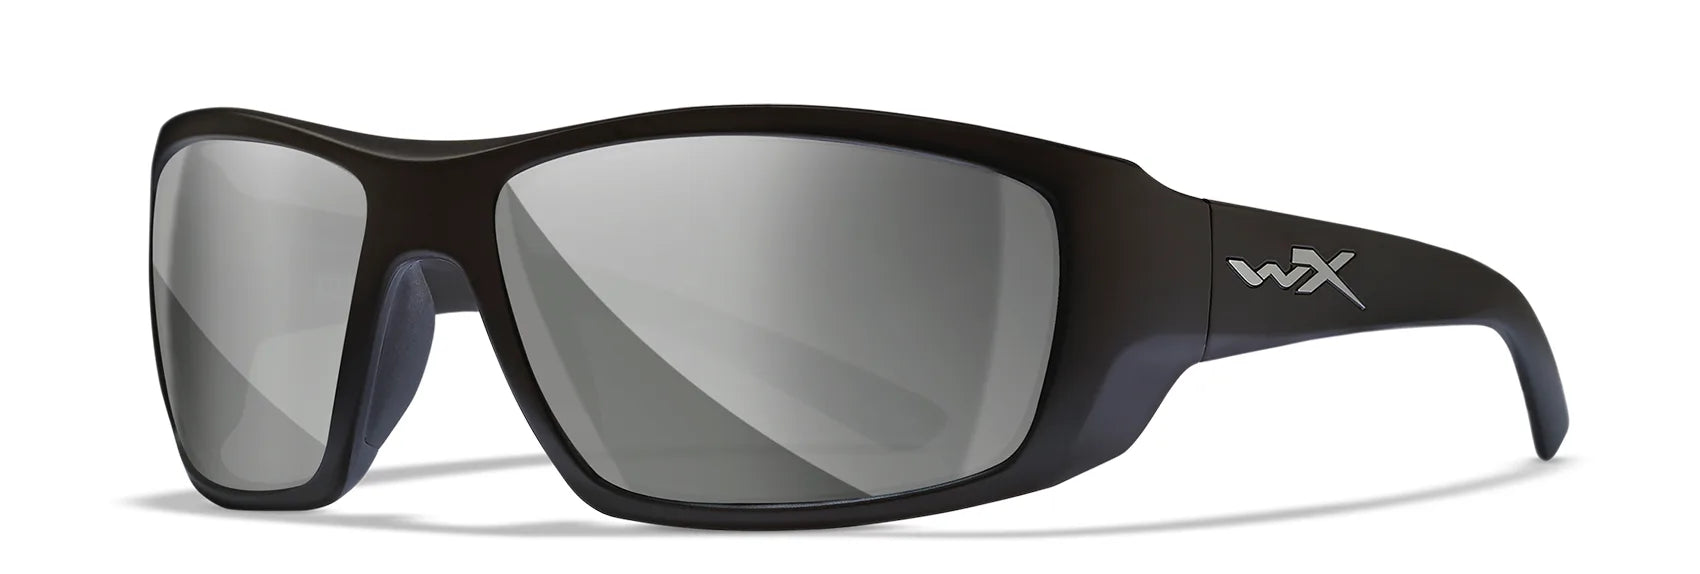 Wiley X Kobe Sunglasses Matte Black / Silver Flash